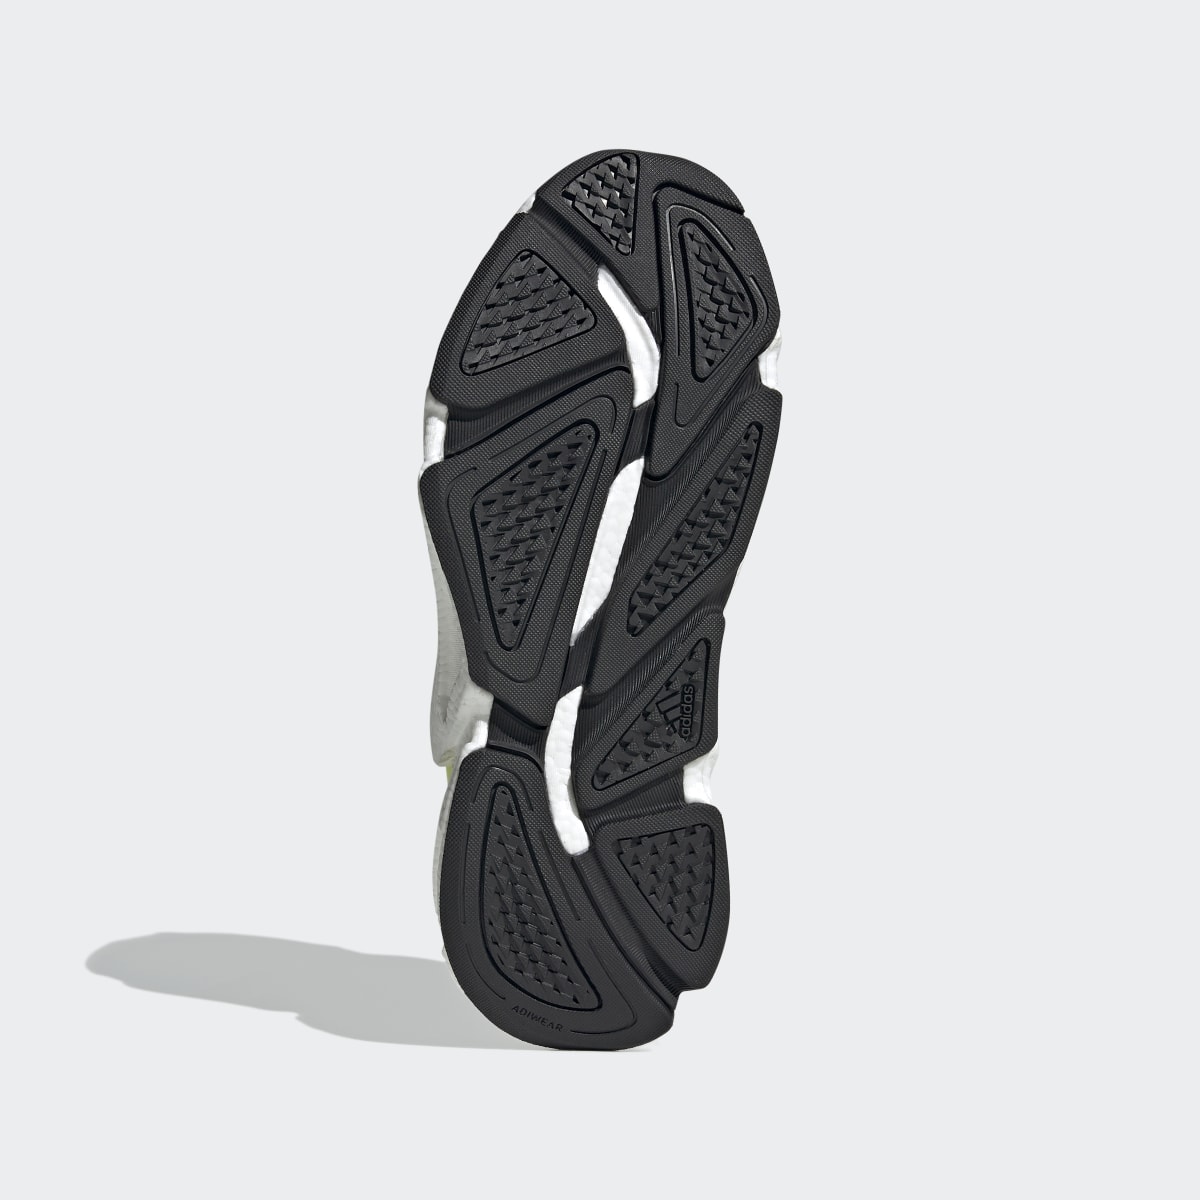 Adidas Zapatilla Karlie Kloss X9000. 4